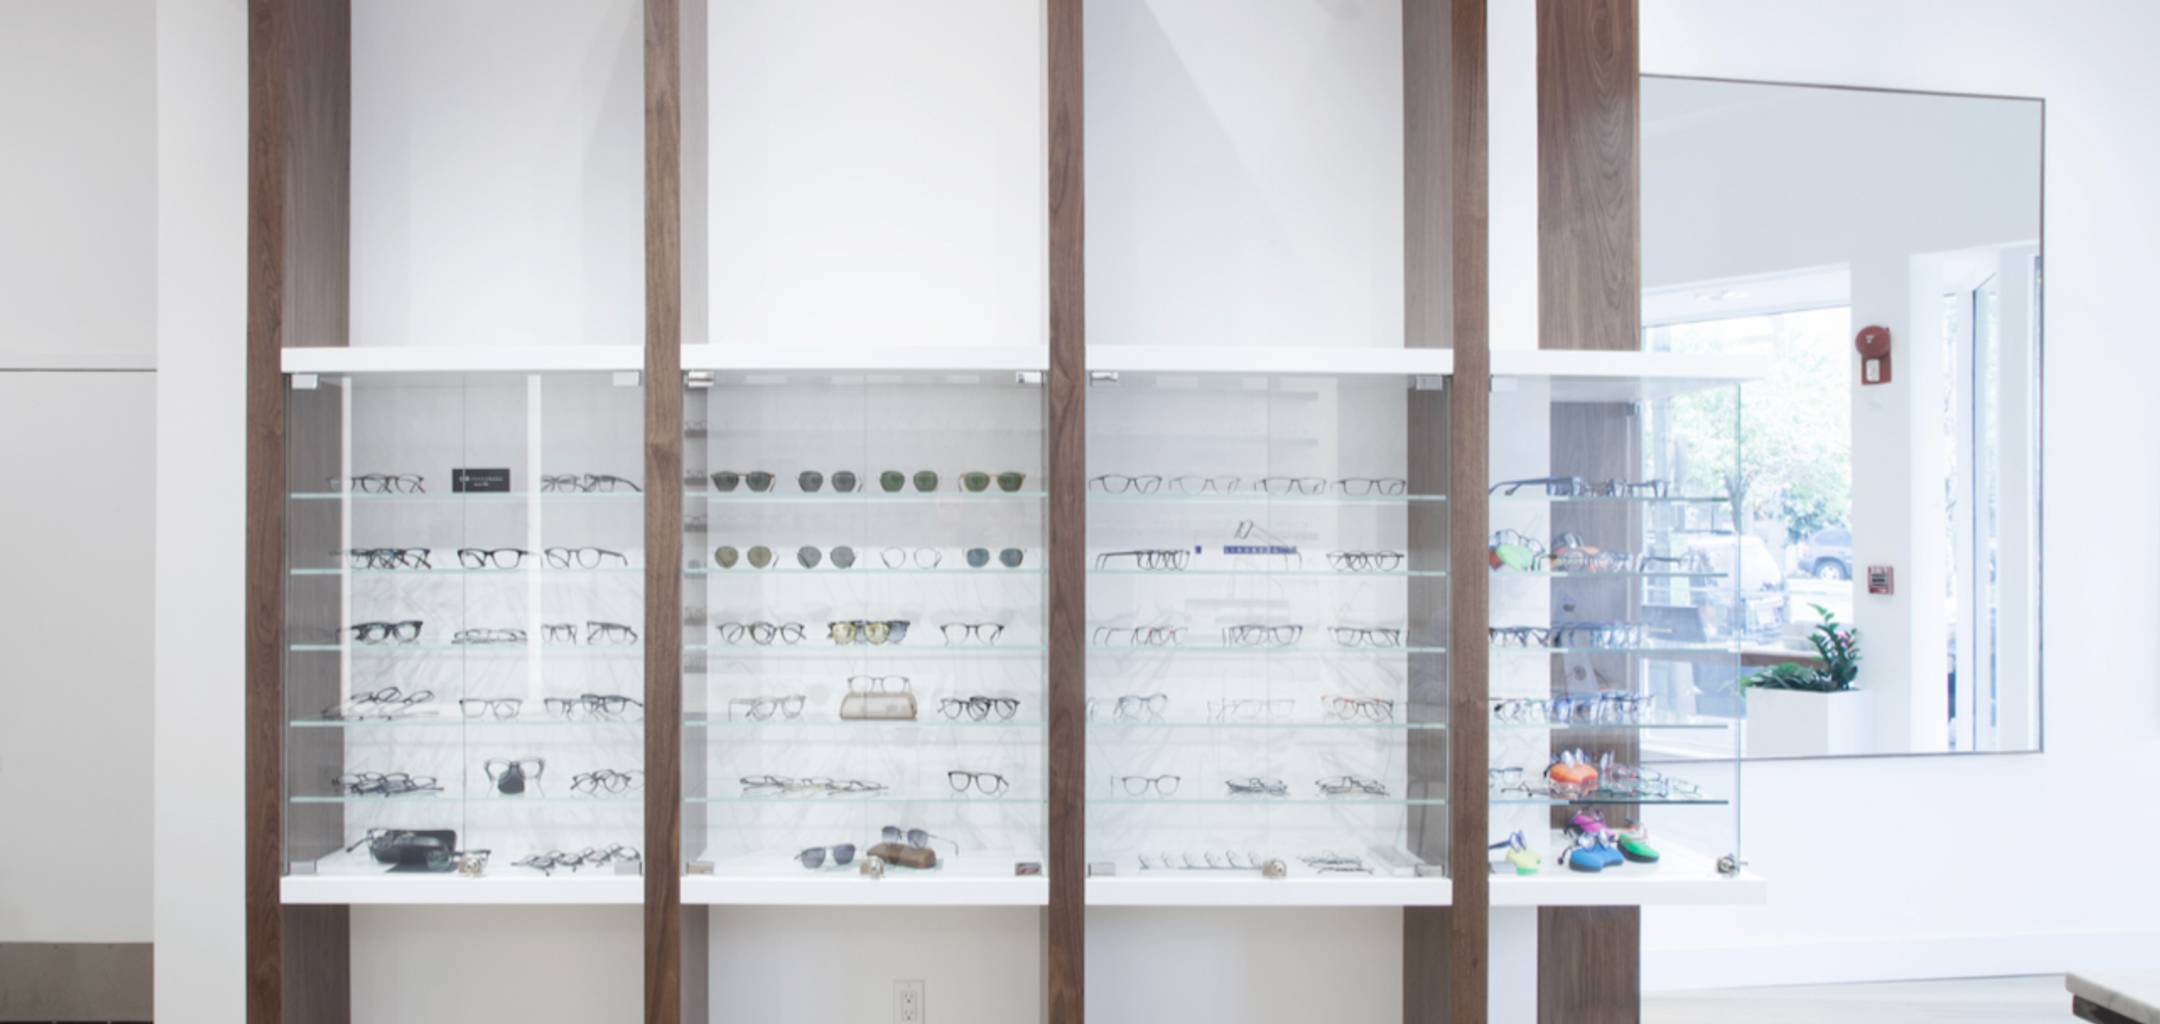 Georgetown Optician store interior